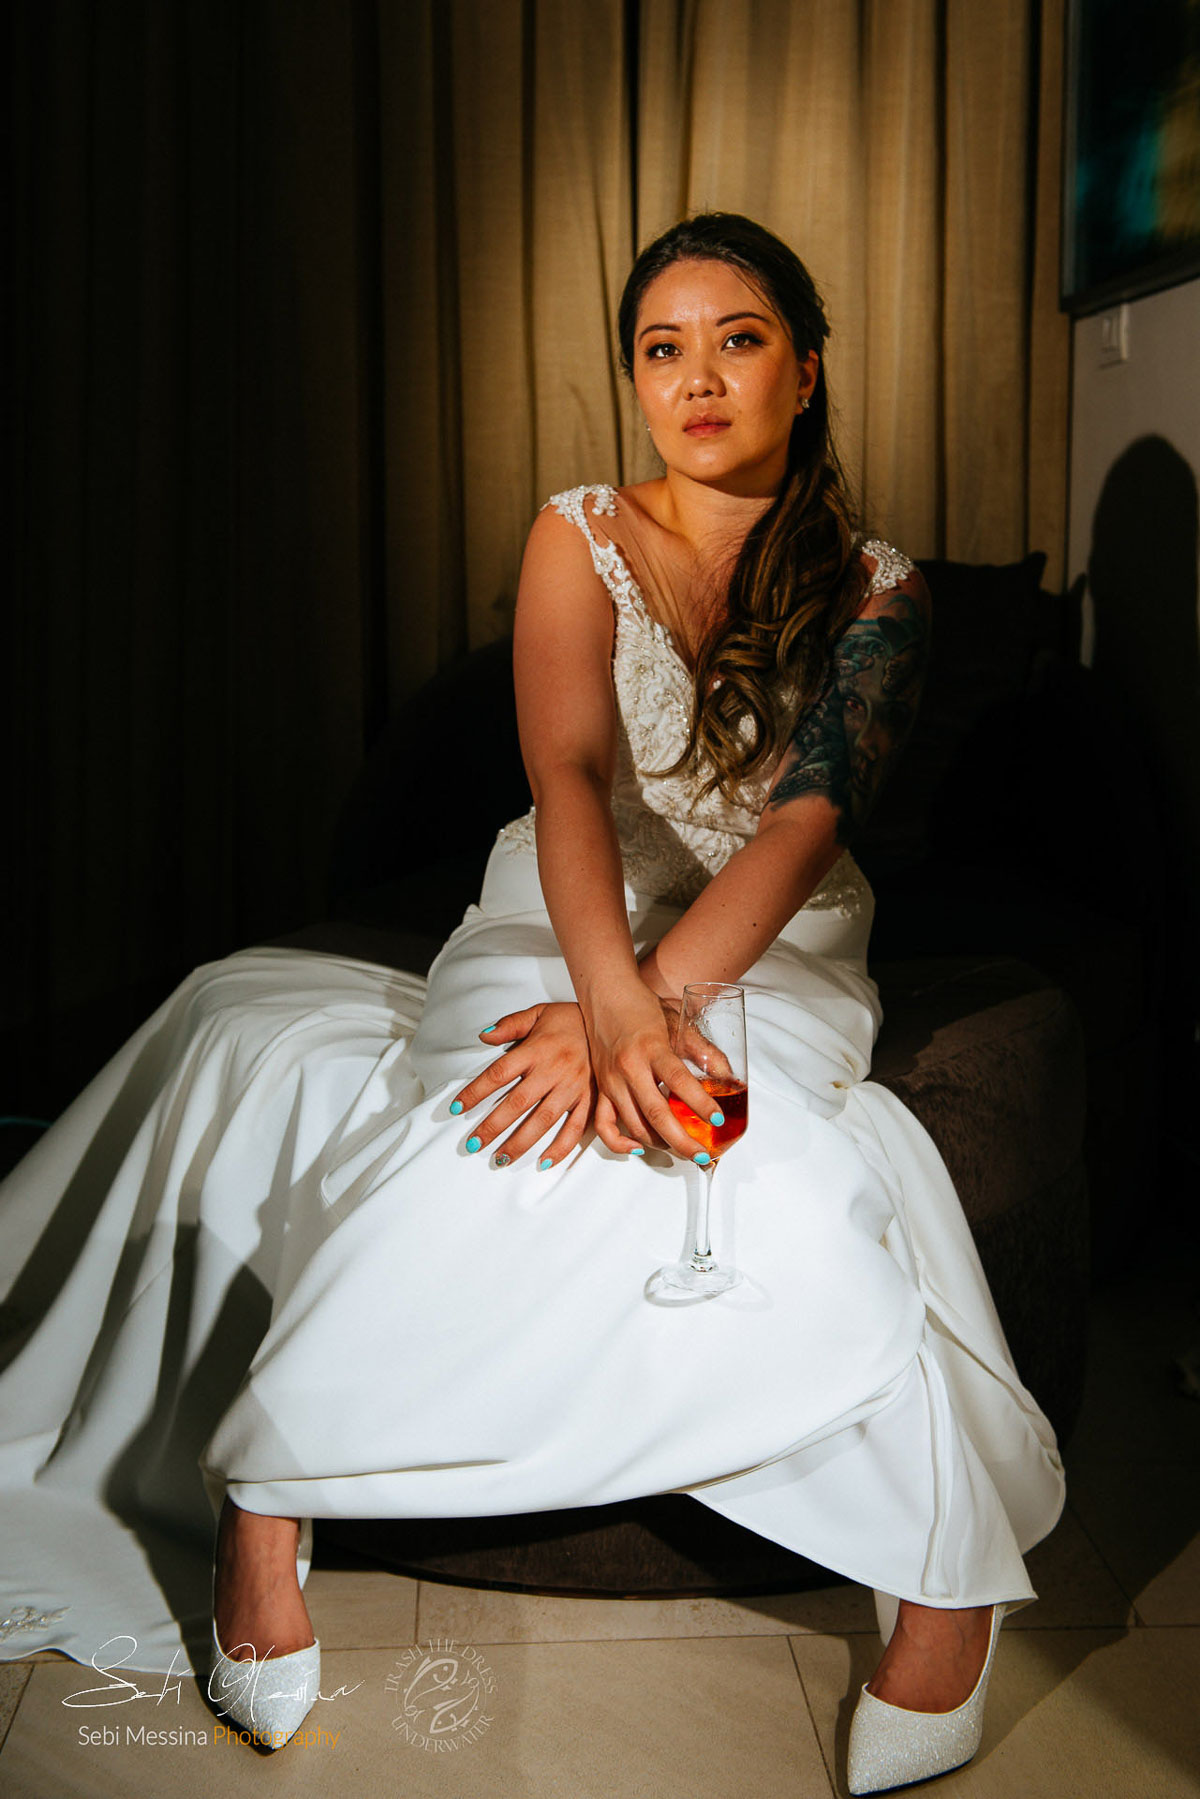 Same-sex wedding Mexico - Sebi Messina Photography